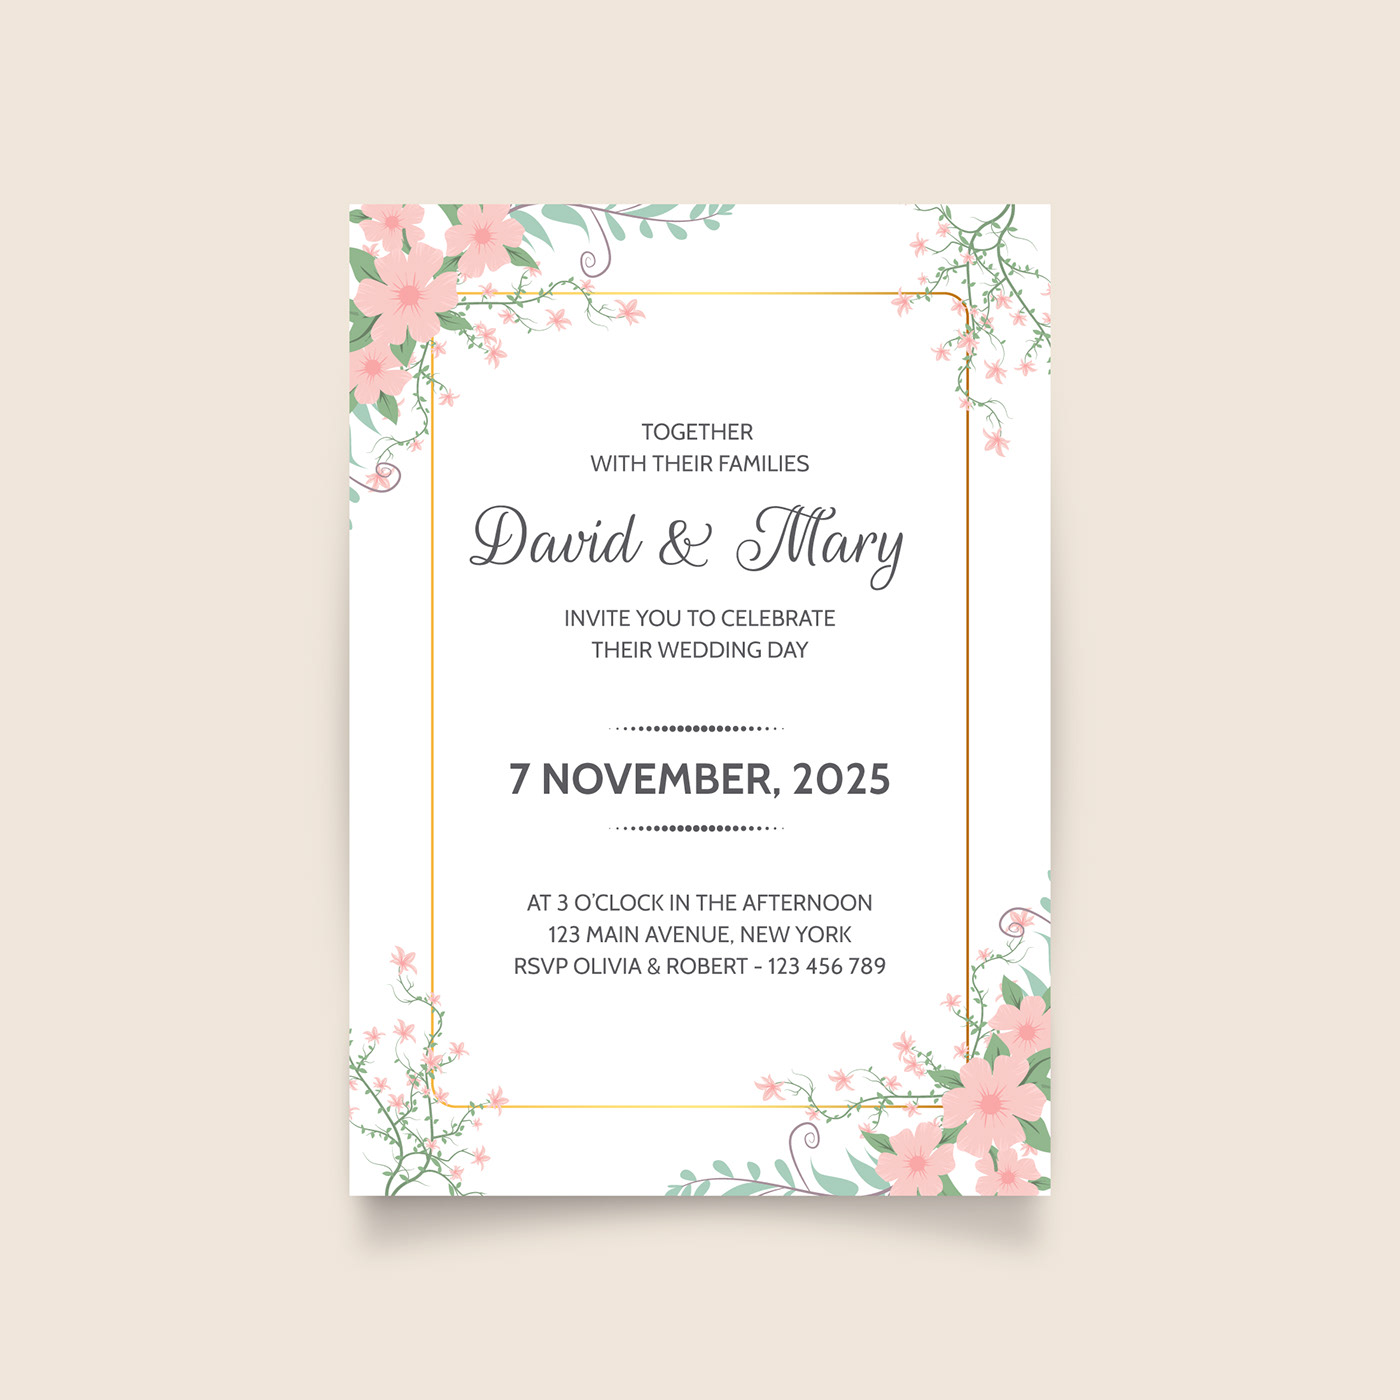 Wedding invitation template Free Download on Behance